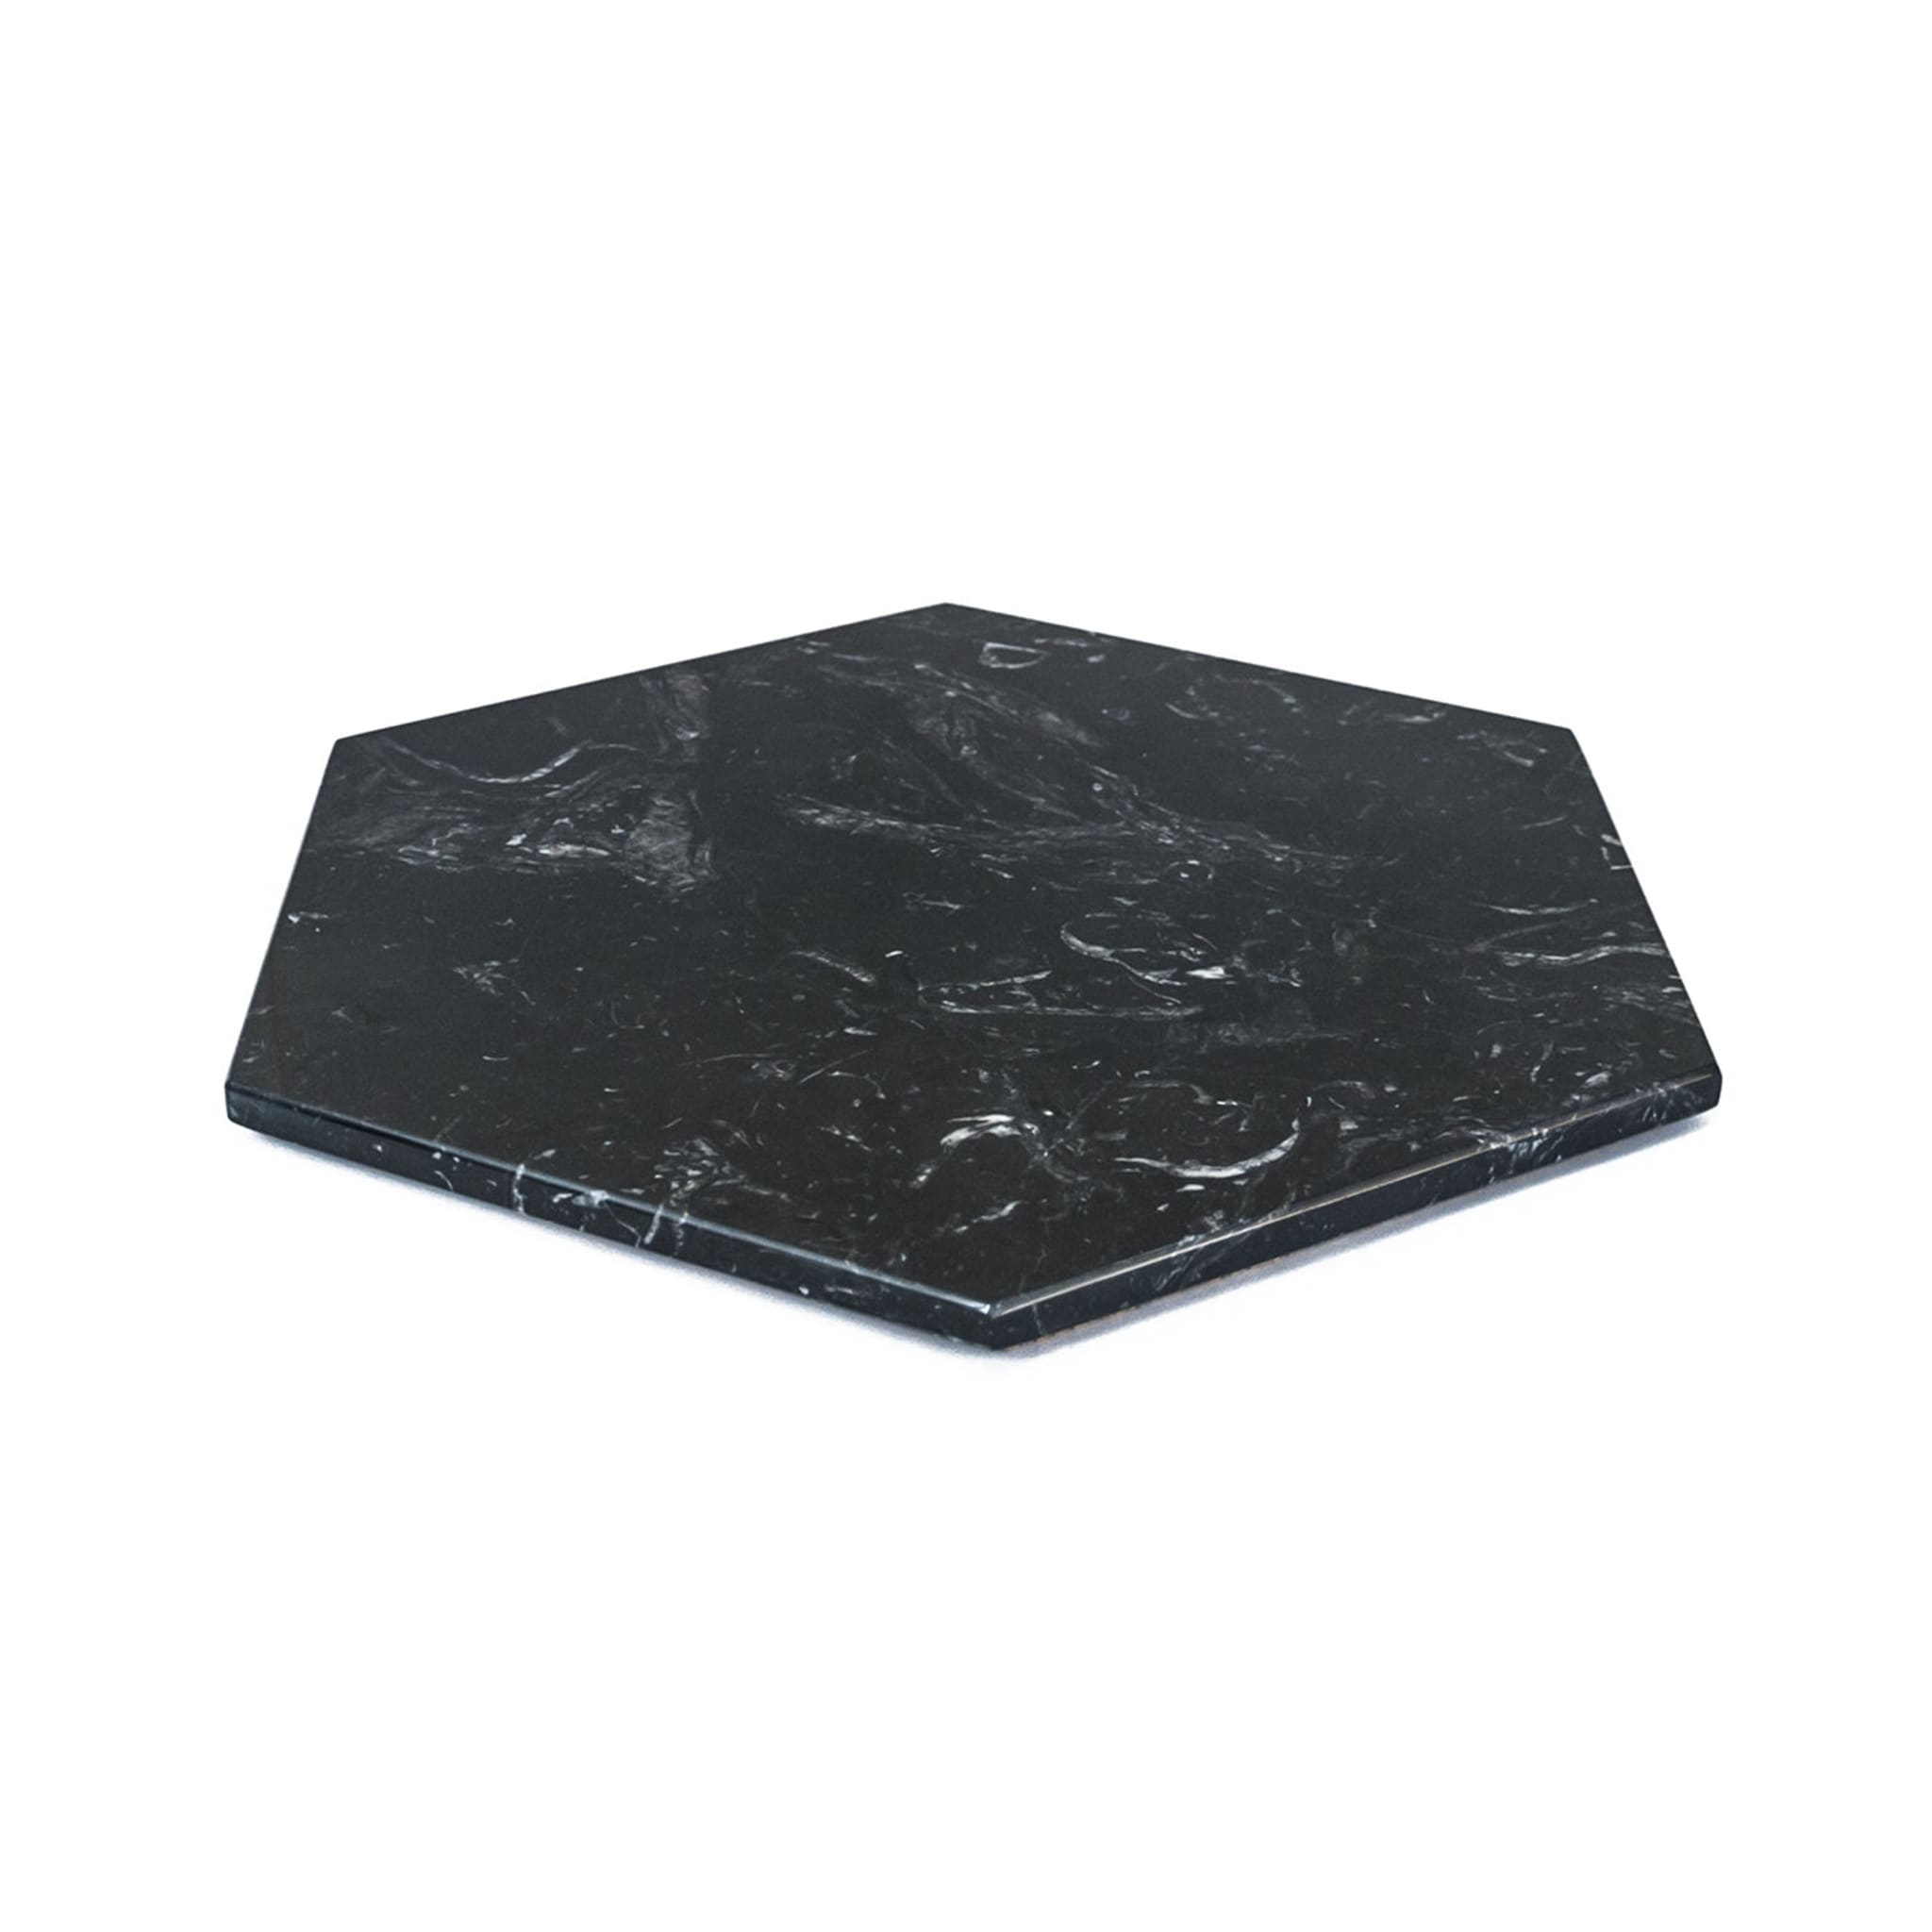 Piastra esagonale in marmo nero - Vista alternativa 3